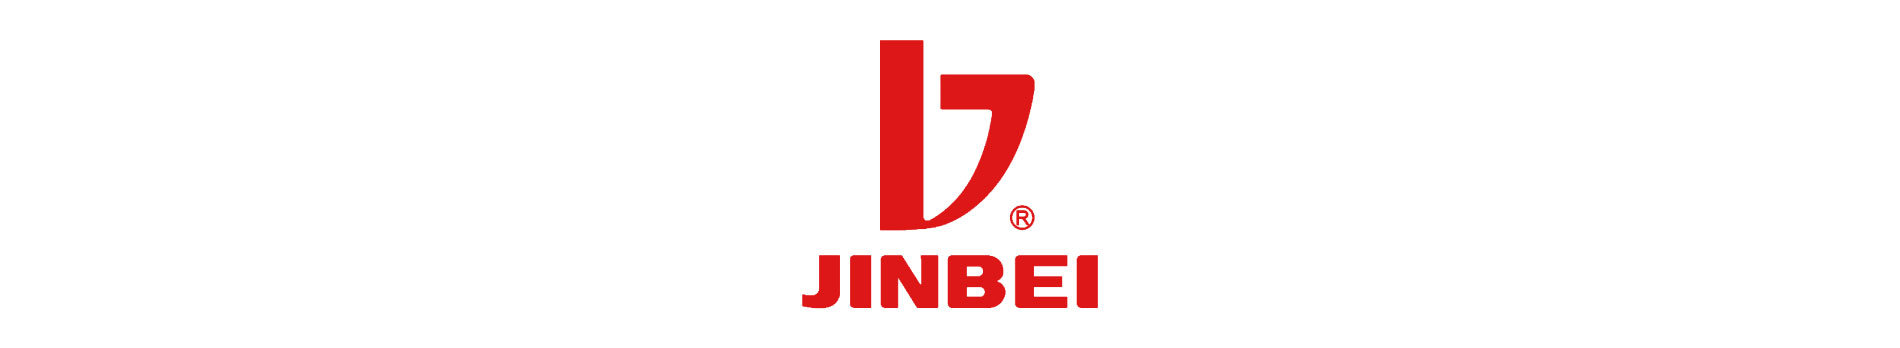 Jinbei-top